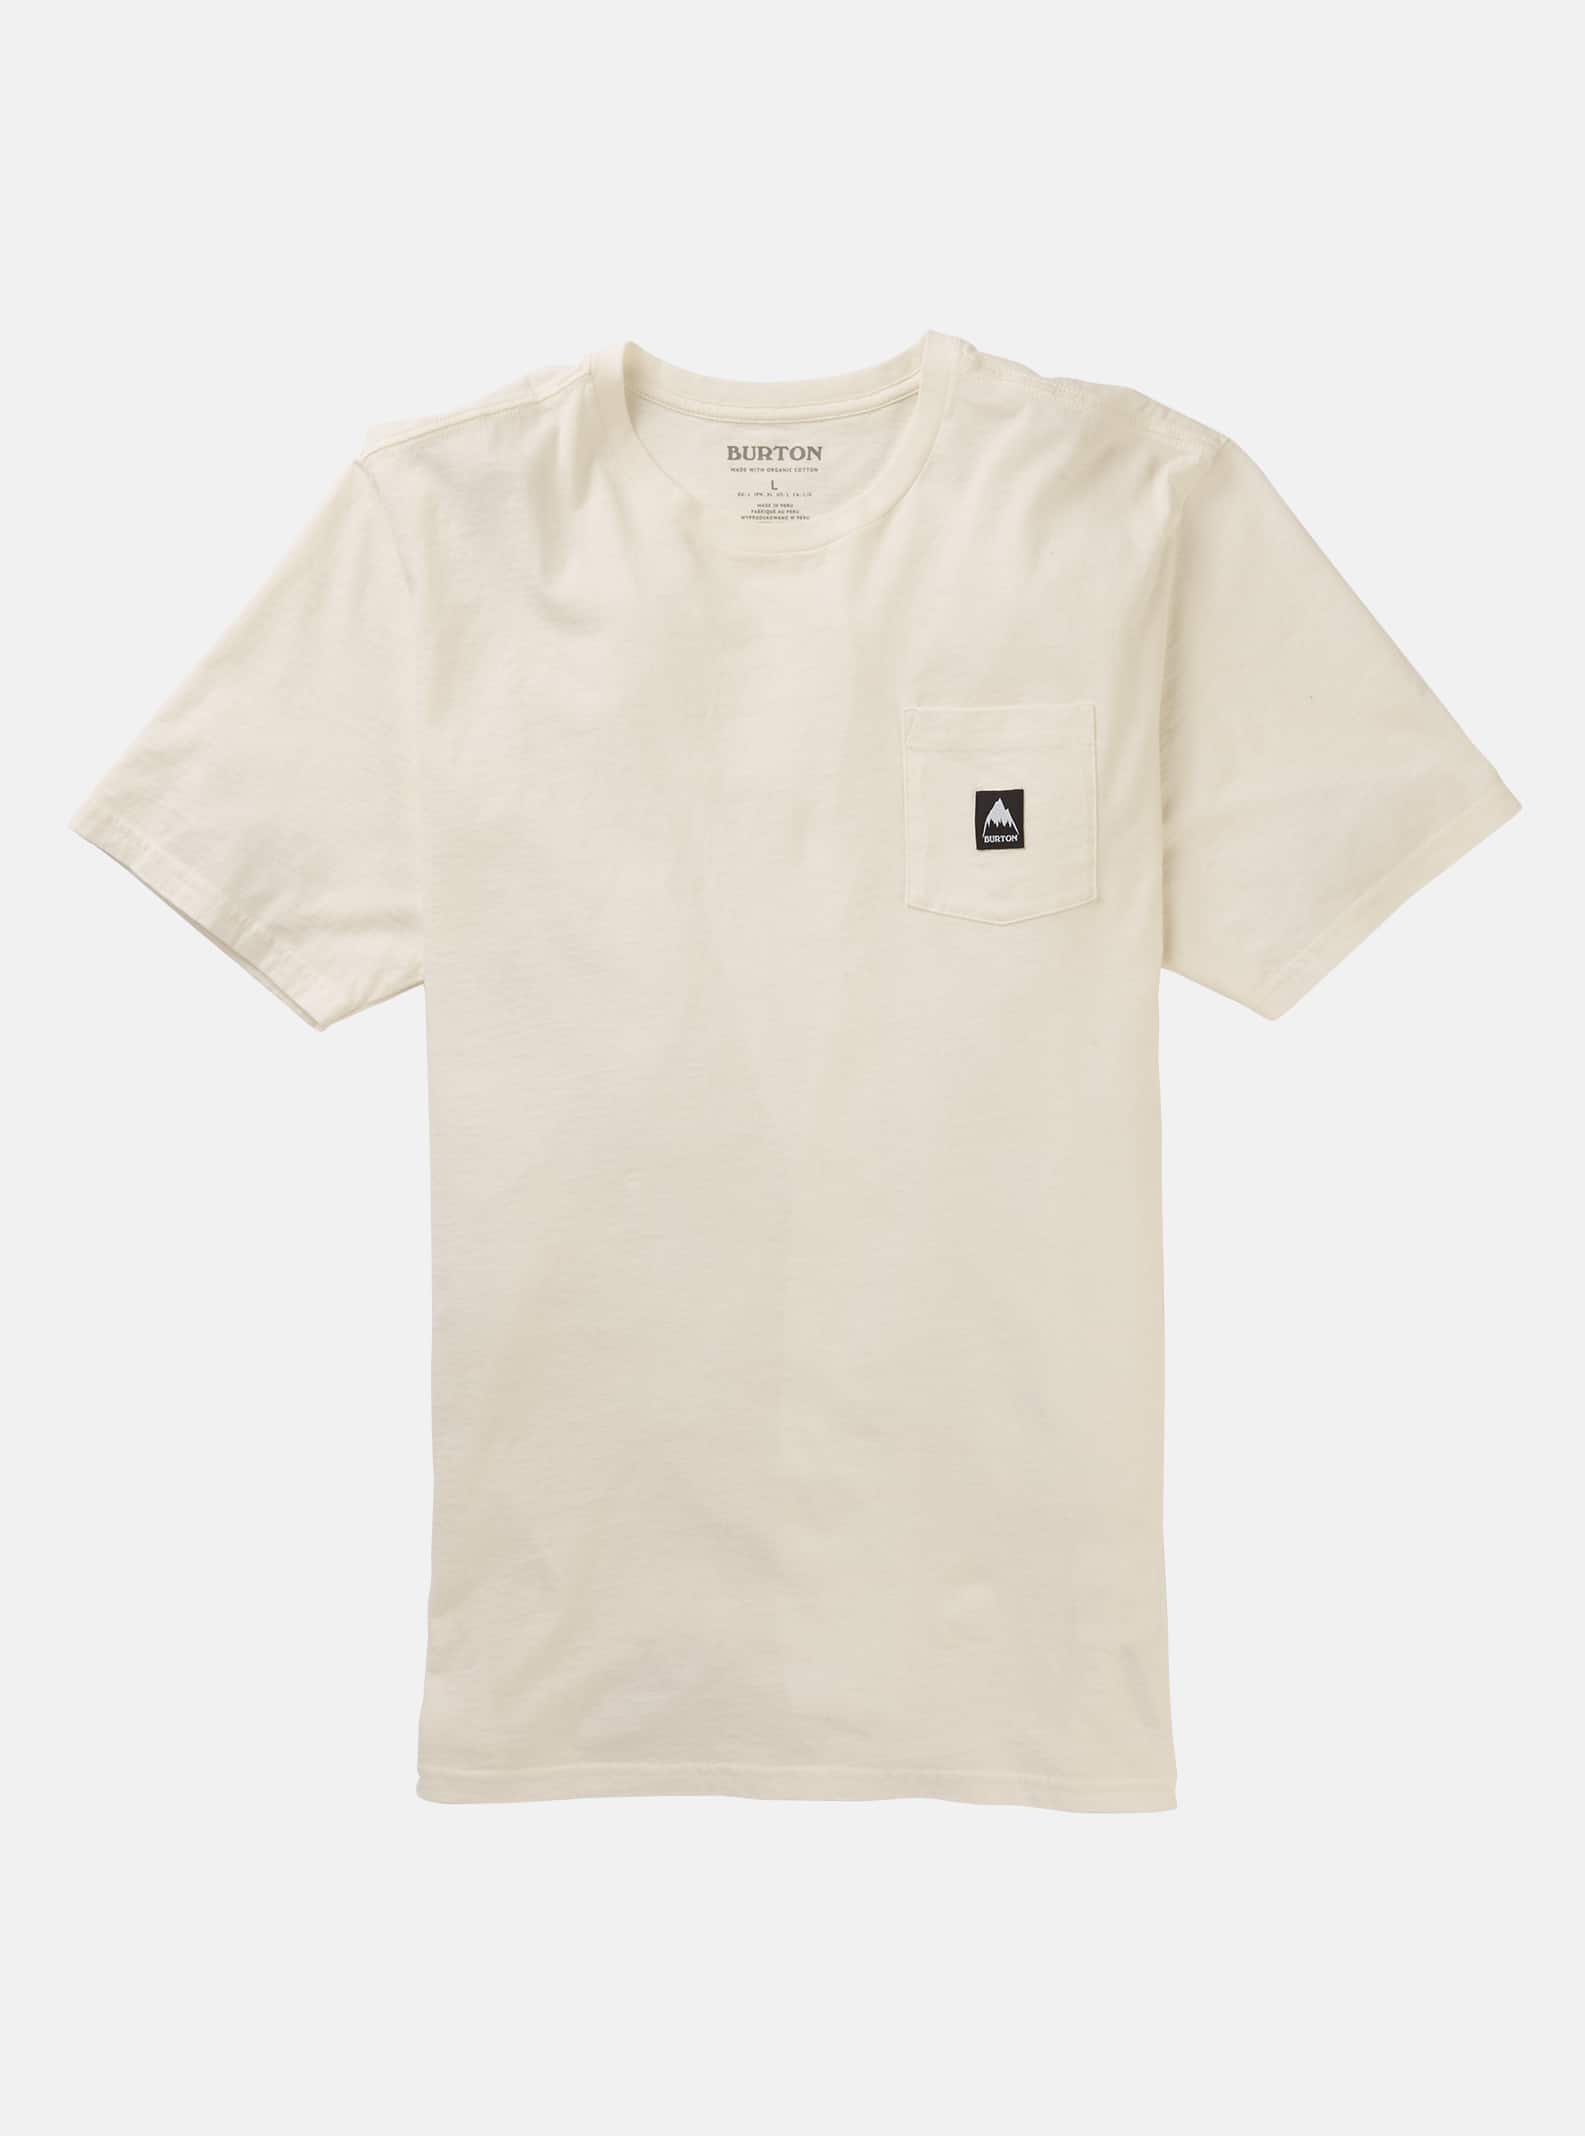 Burton Colfax Short Sleeve T-Shirt, Stout White, L